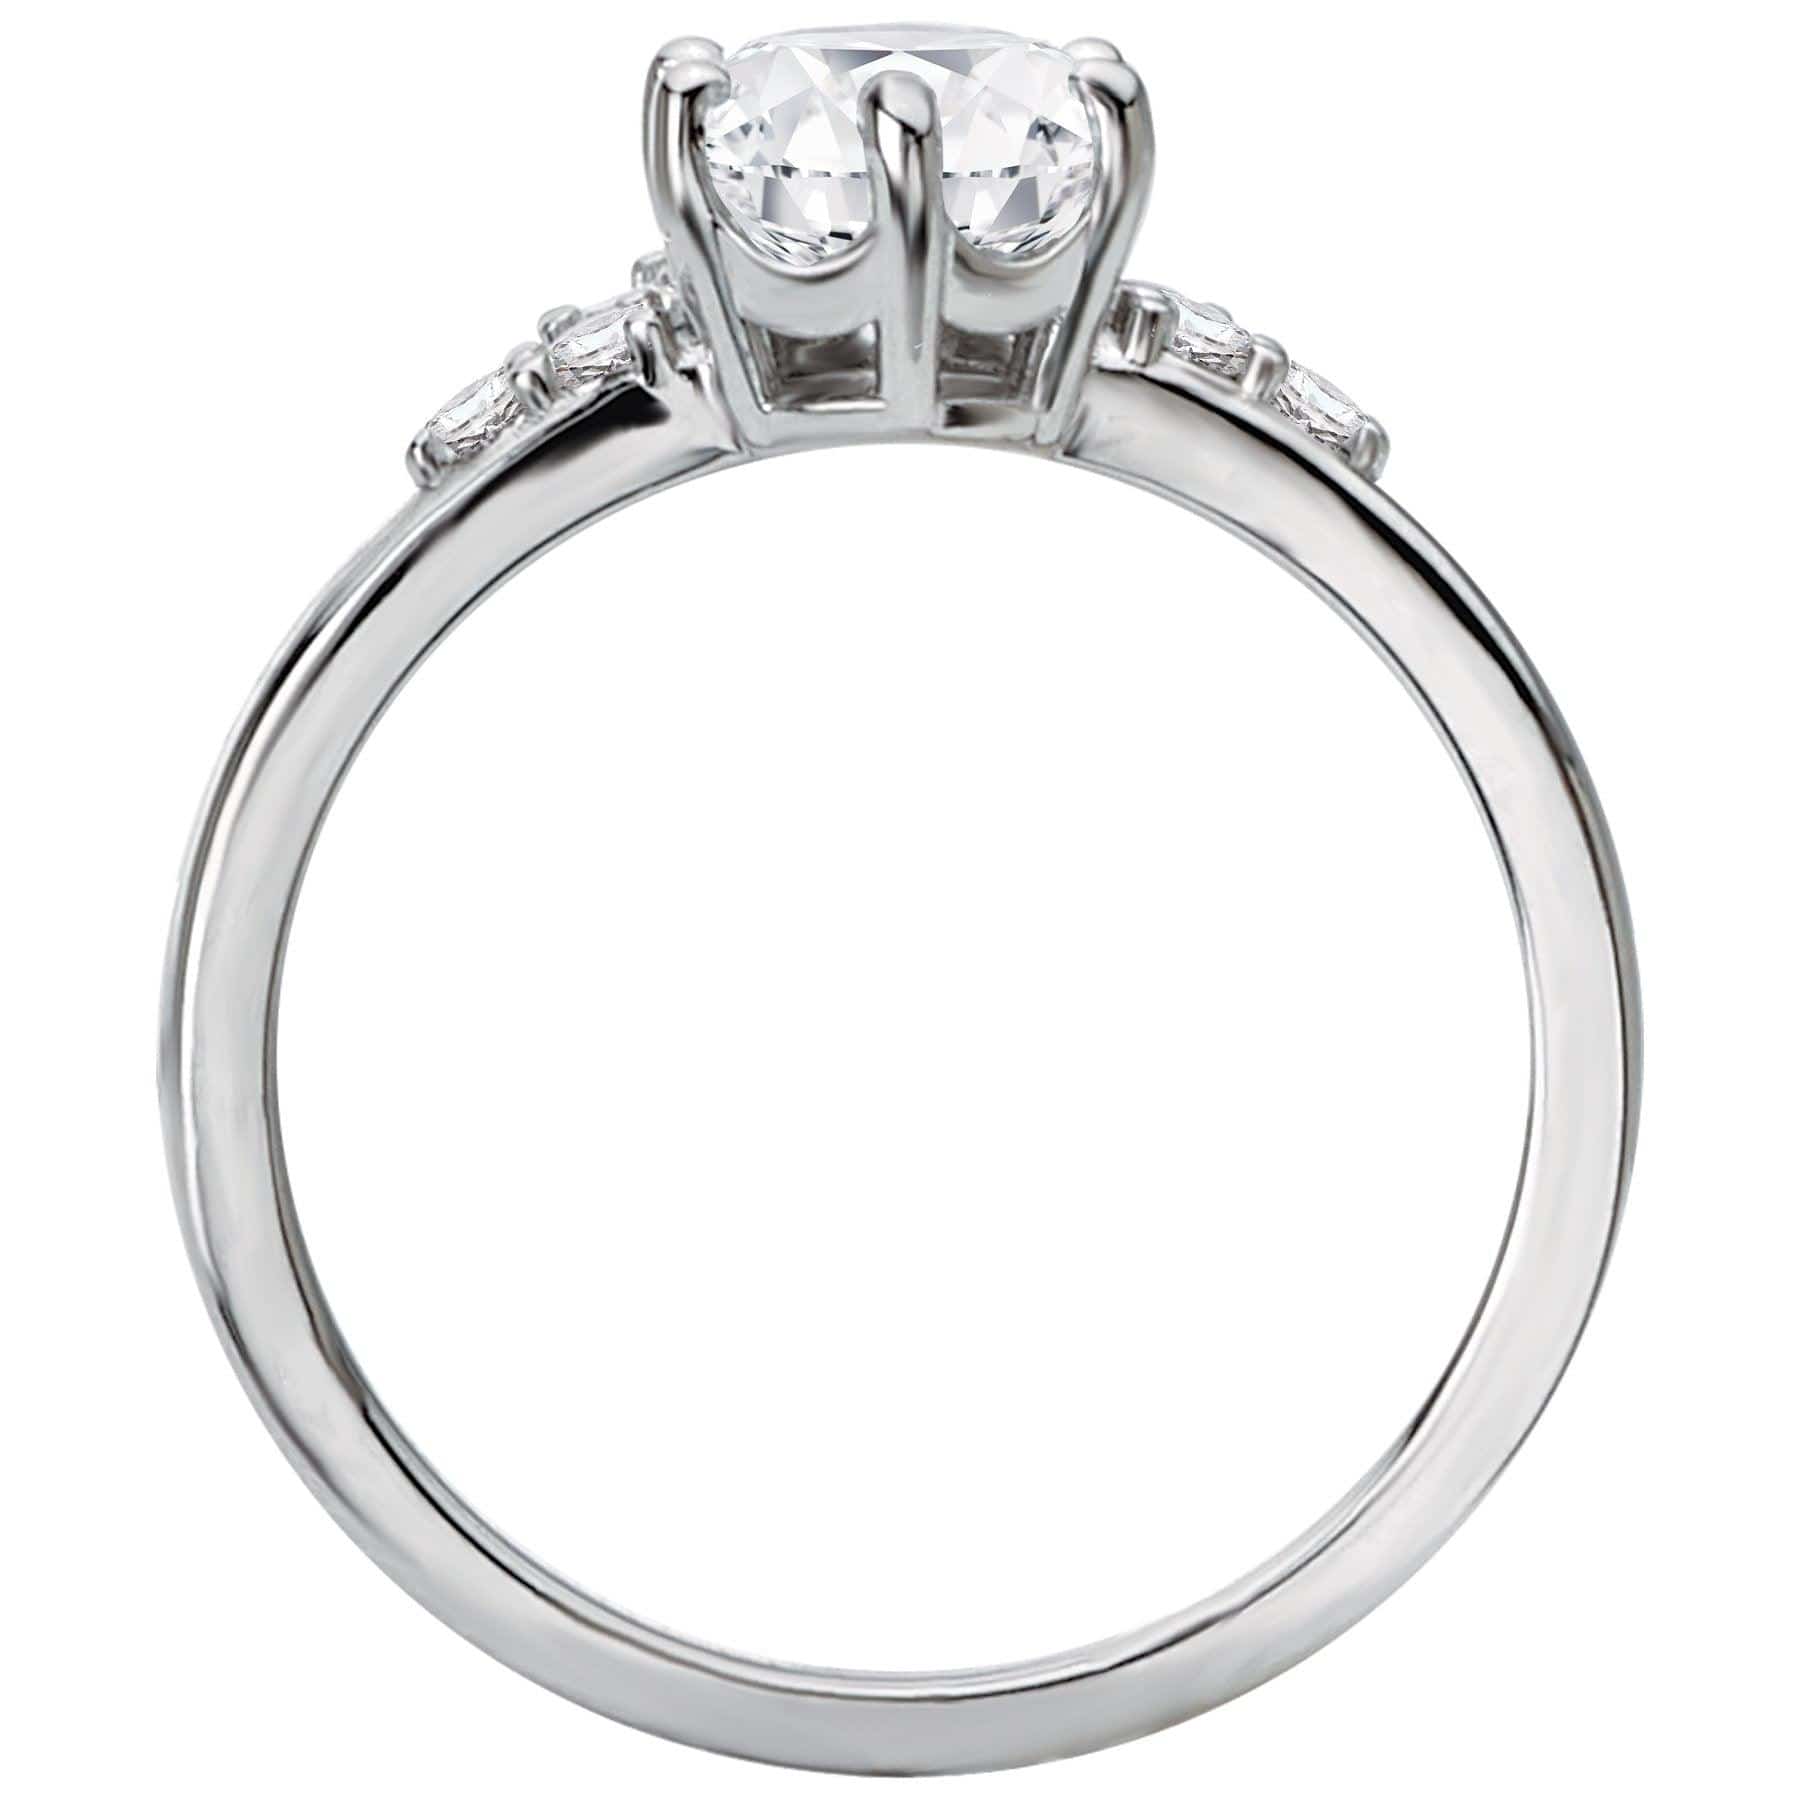 BW JAMES Engagement Rings "The Iona" Halo Semi-Mount Diamond Ring